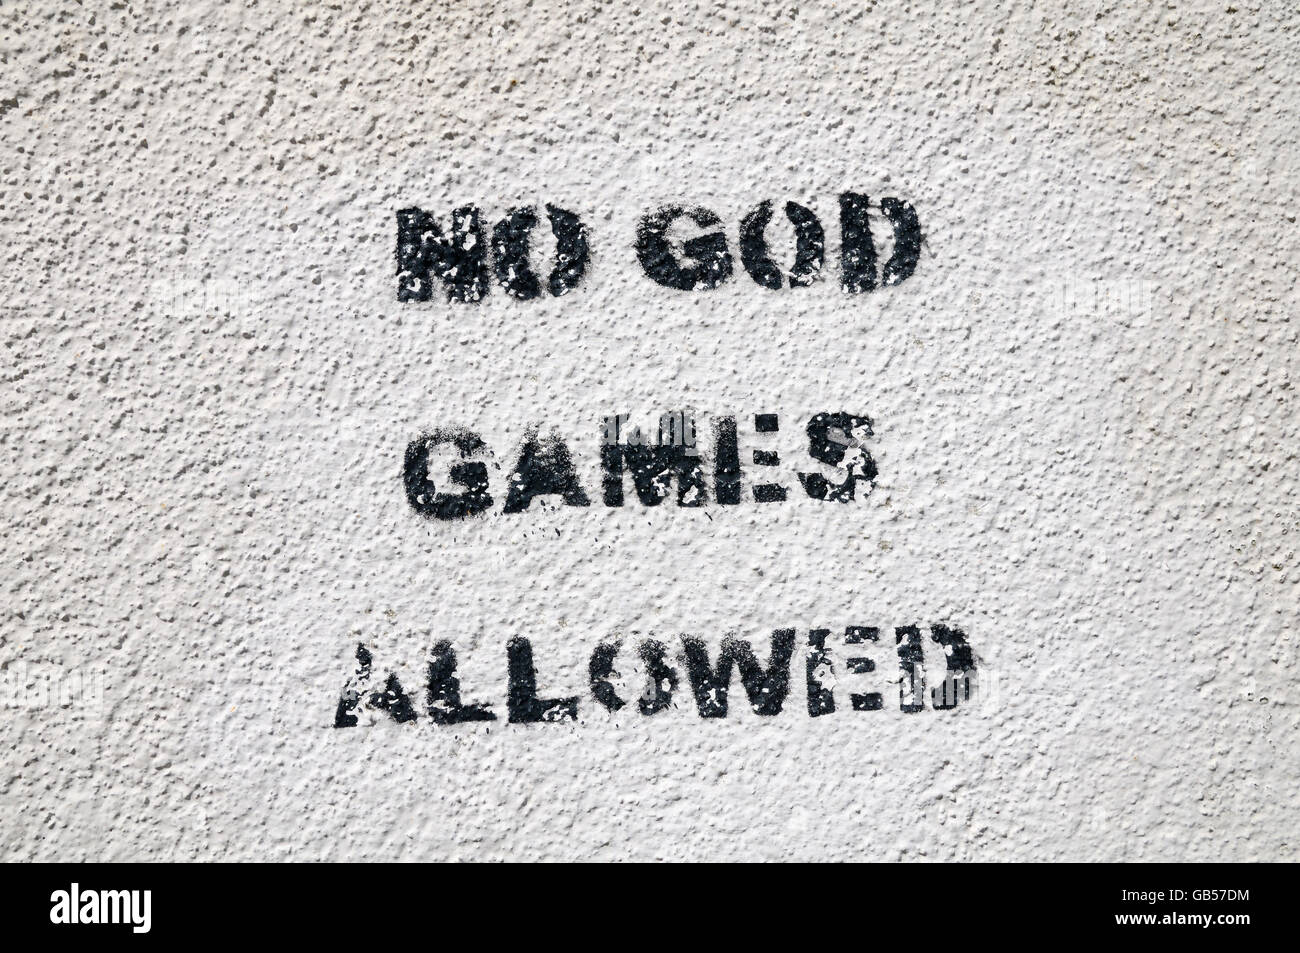 Stencil graffiti on a wall 'NO GOD GAMES ALLOWED' Stock Photo